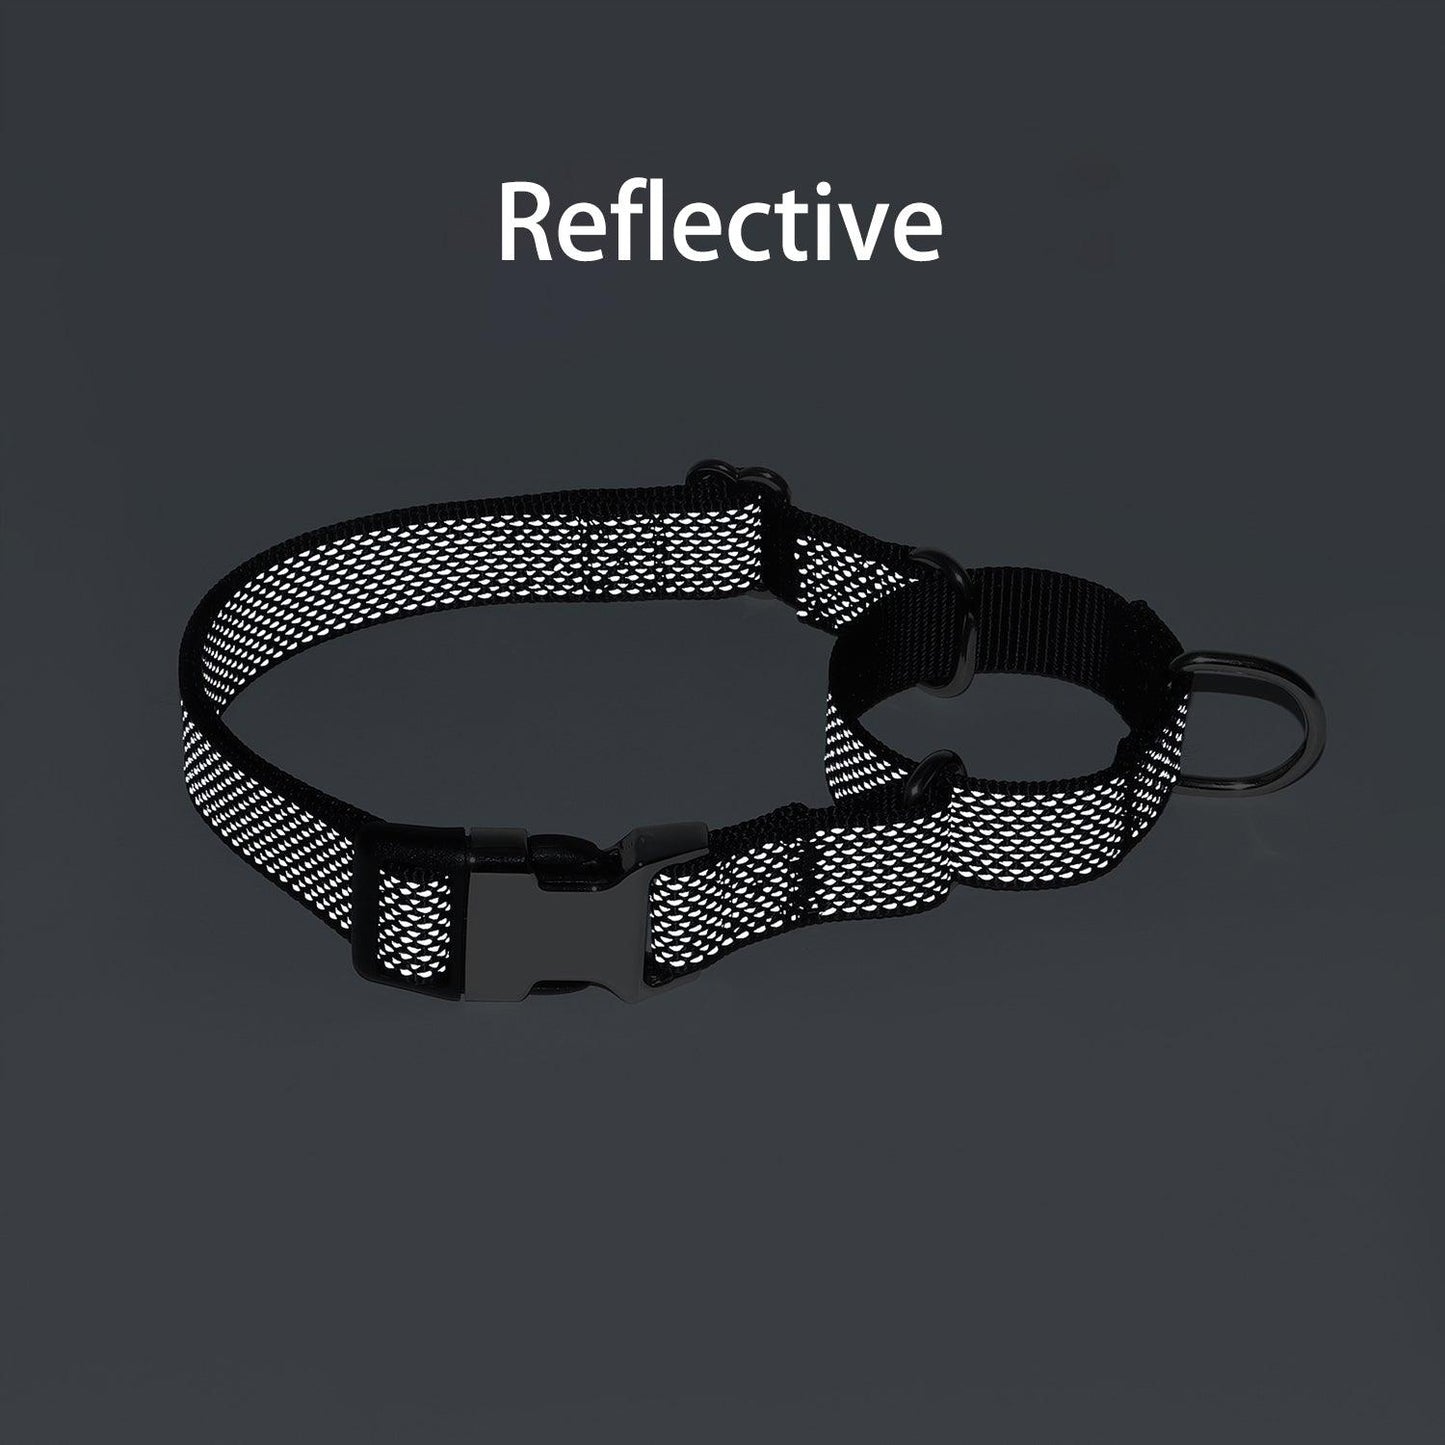 Personalized Dog Collar Adjustable Reflective Martingale Collars - iTalkPet